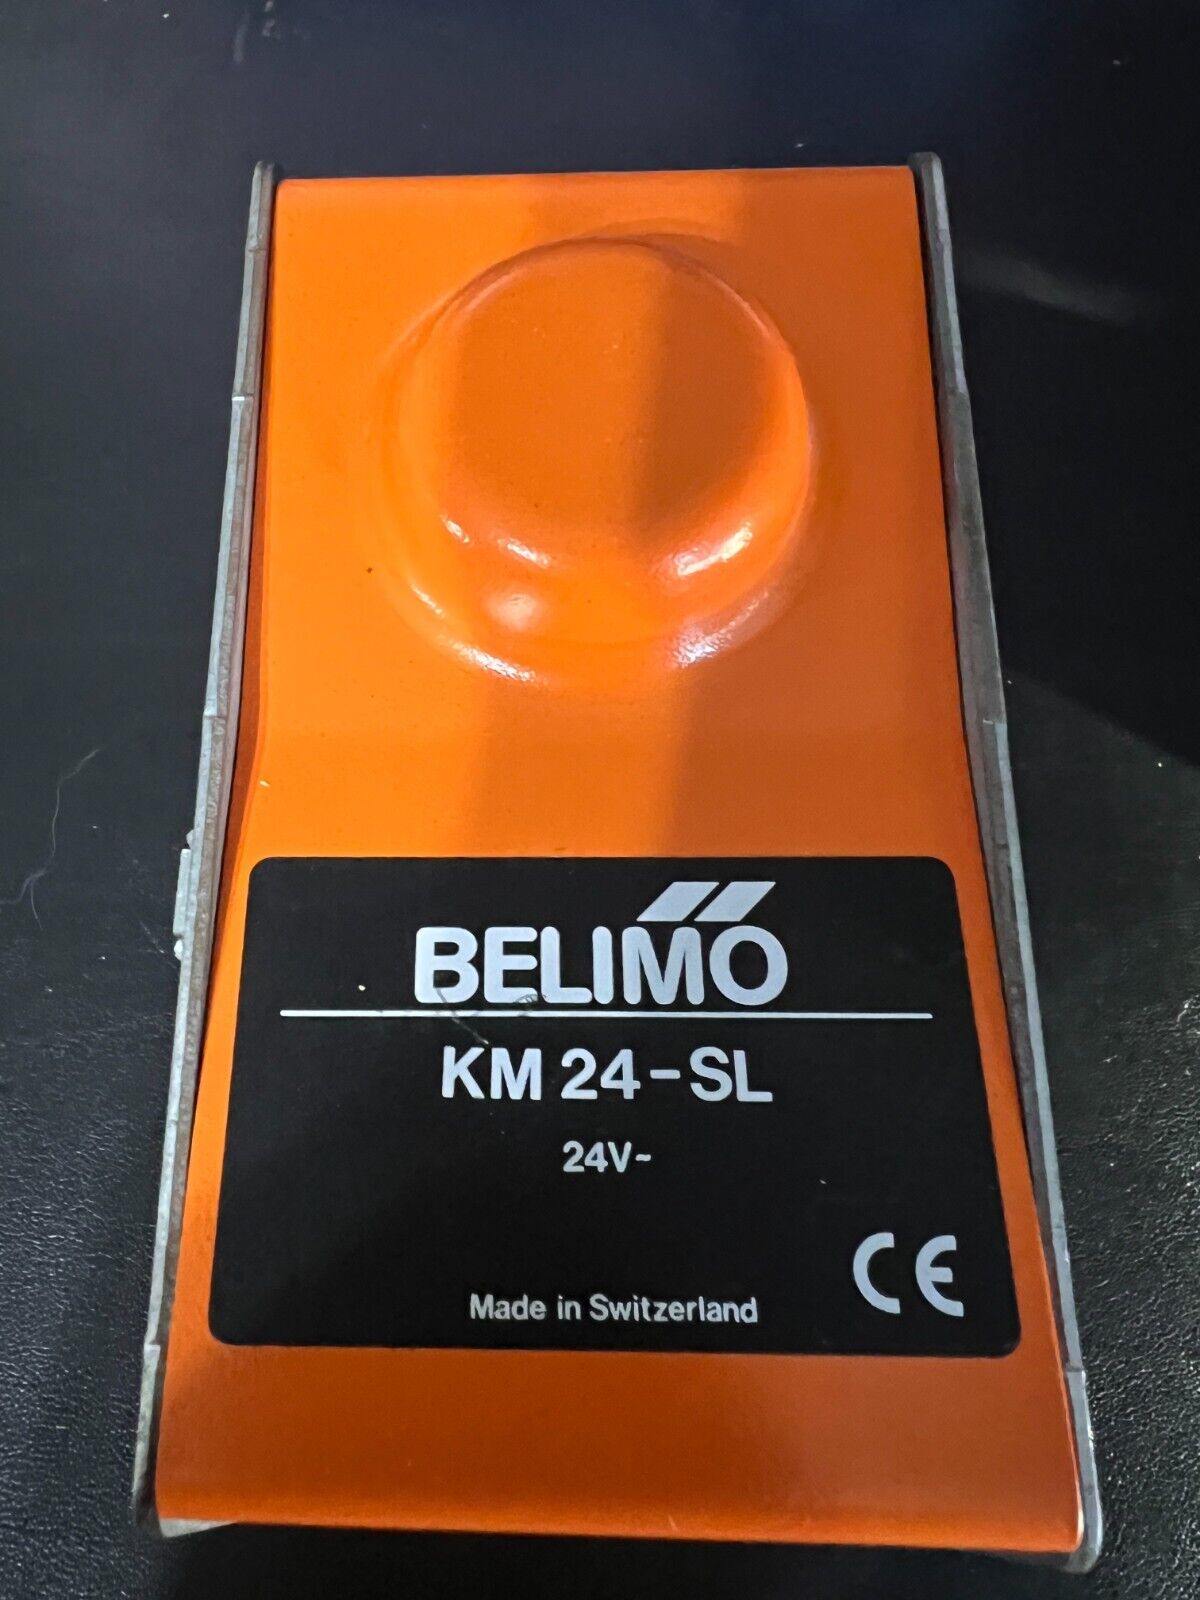 Belimo KM24-SL volumetric control valves